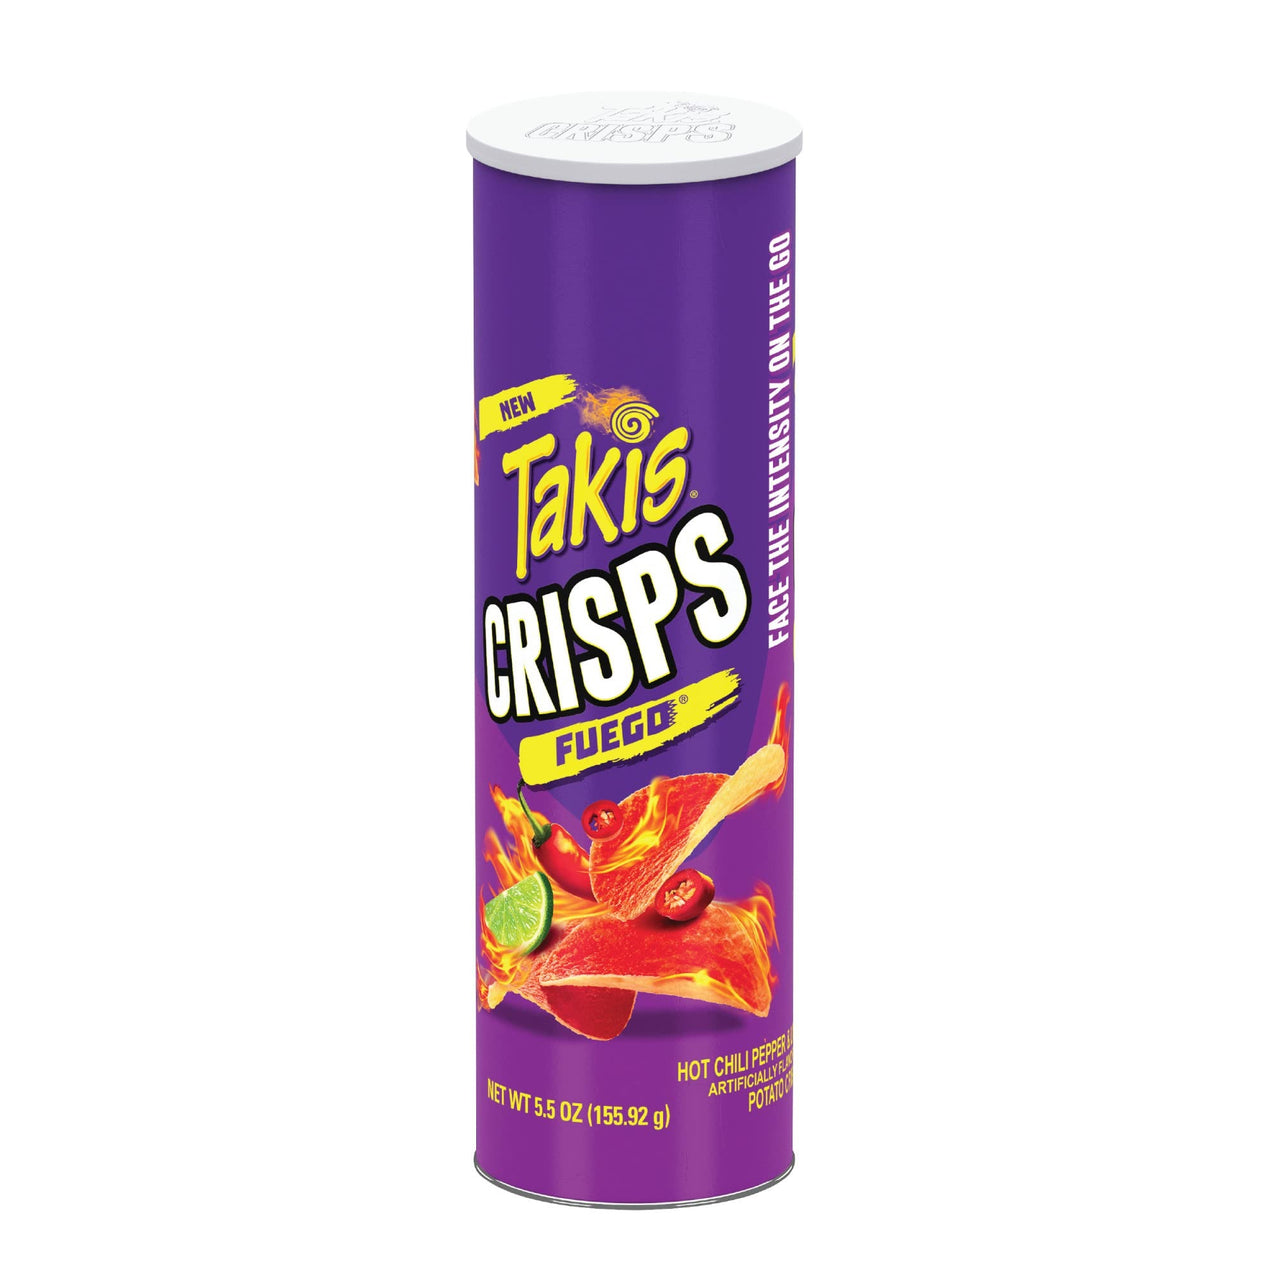 Takis Crisps - Fuego (155.92g)